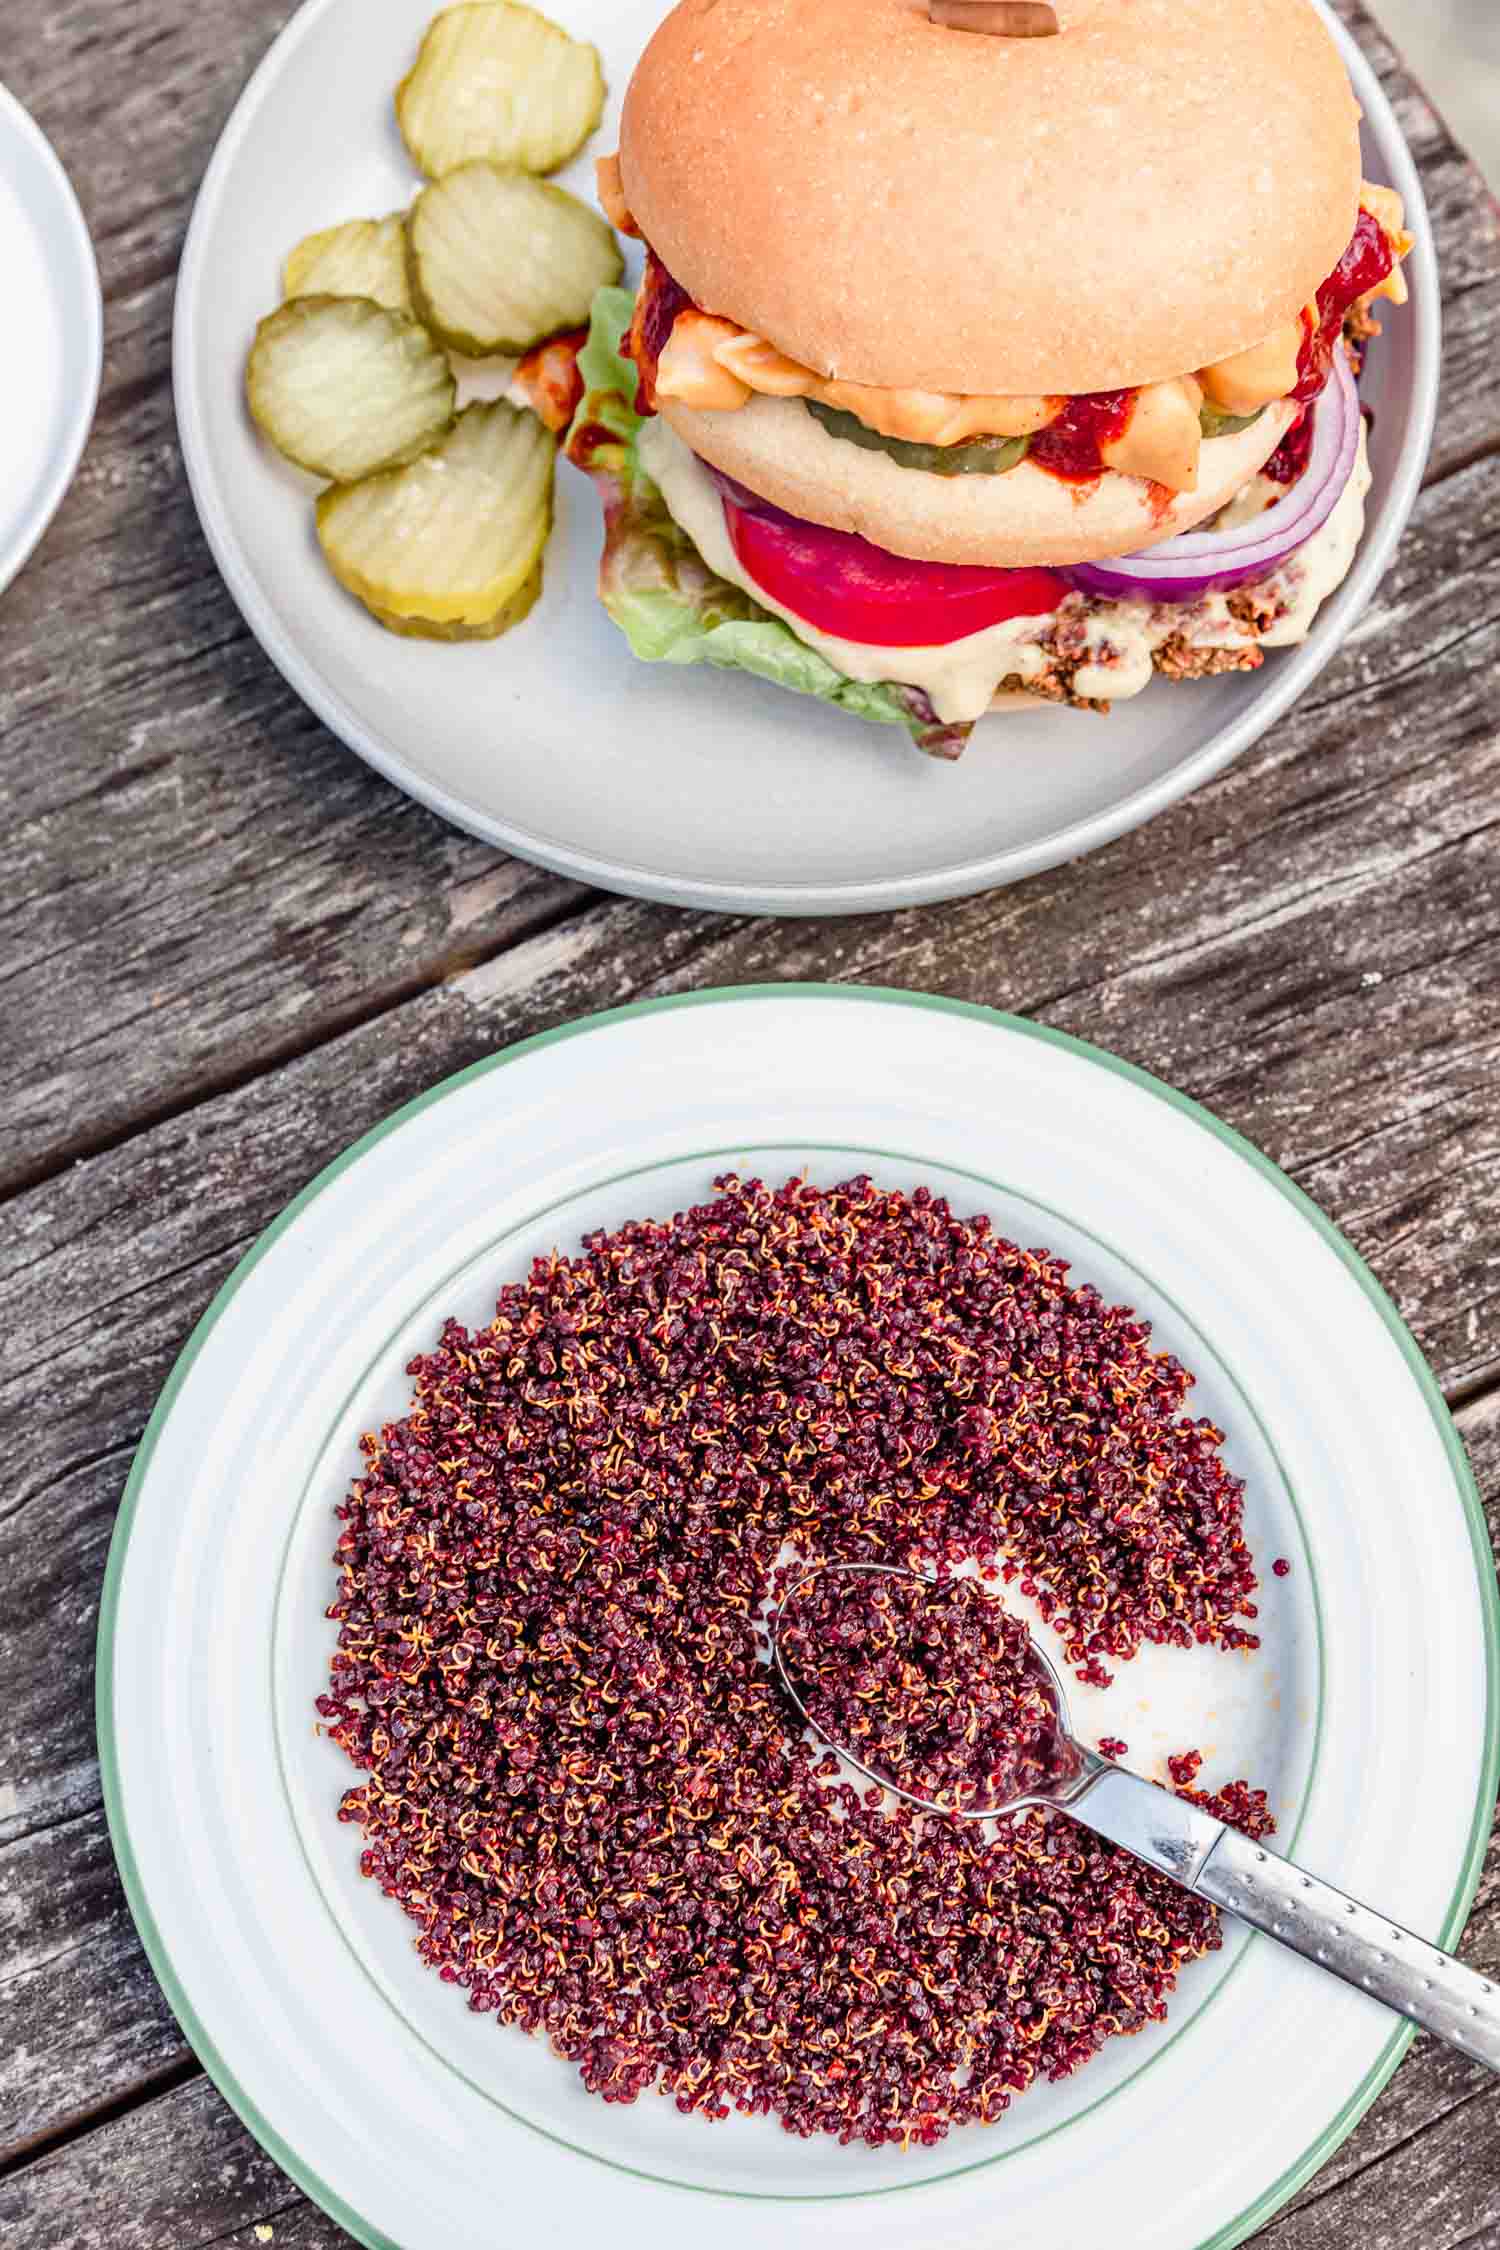 Quinoa Bacon Bits from  Epic Vegan  by Dustin Harder. #veganrecipe #veganbacon #quinoa #veganbaconbits #epicvegan